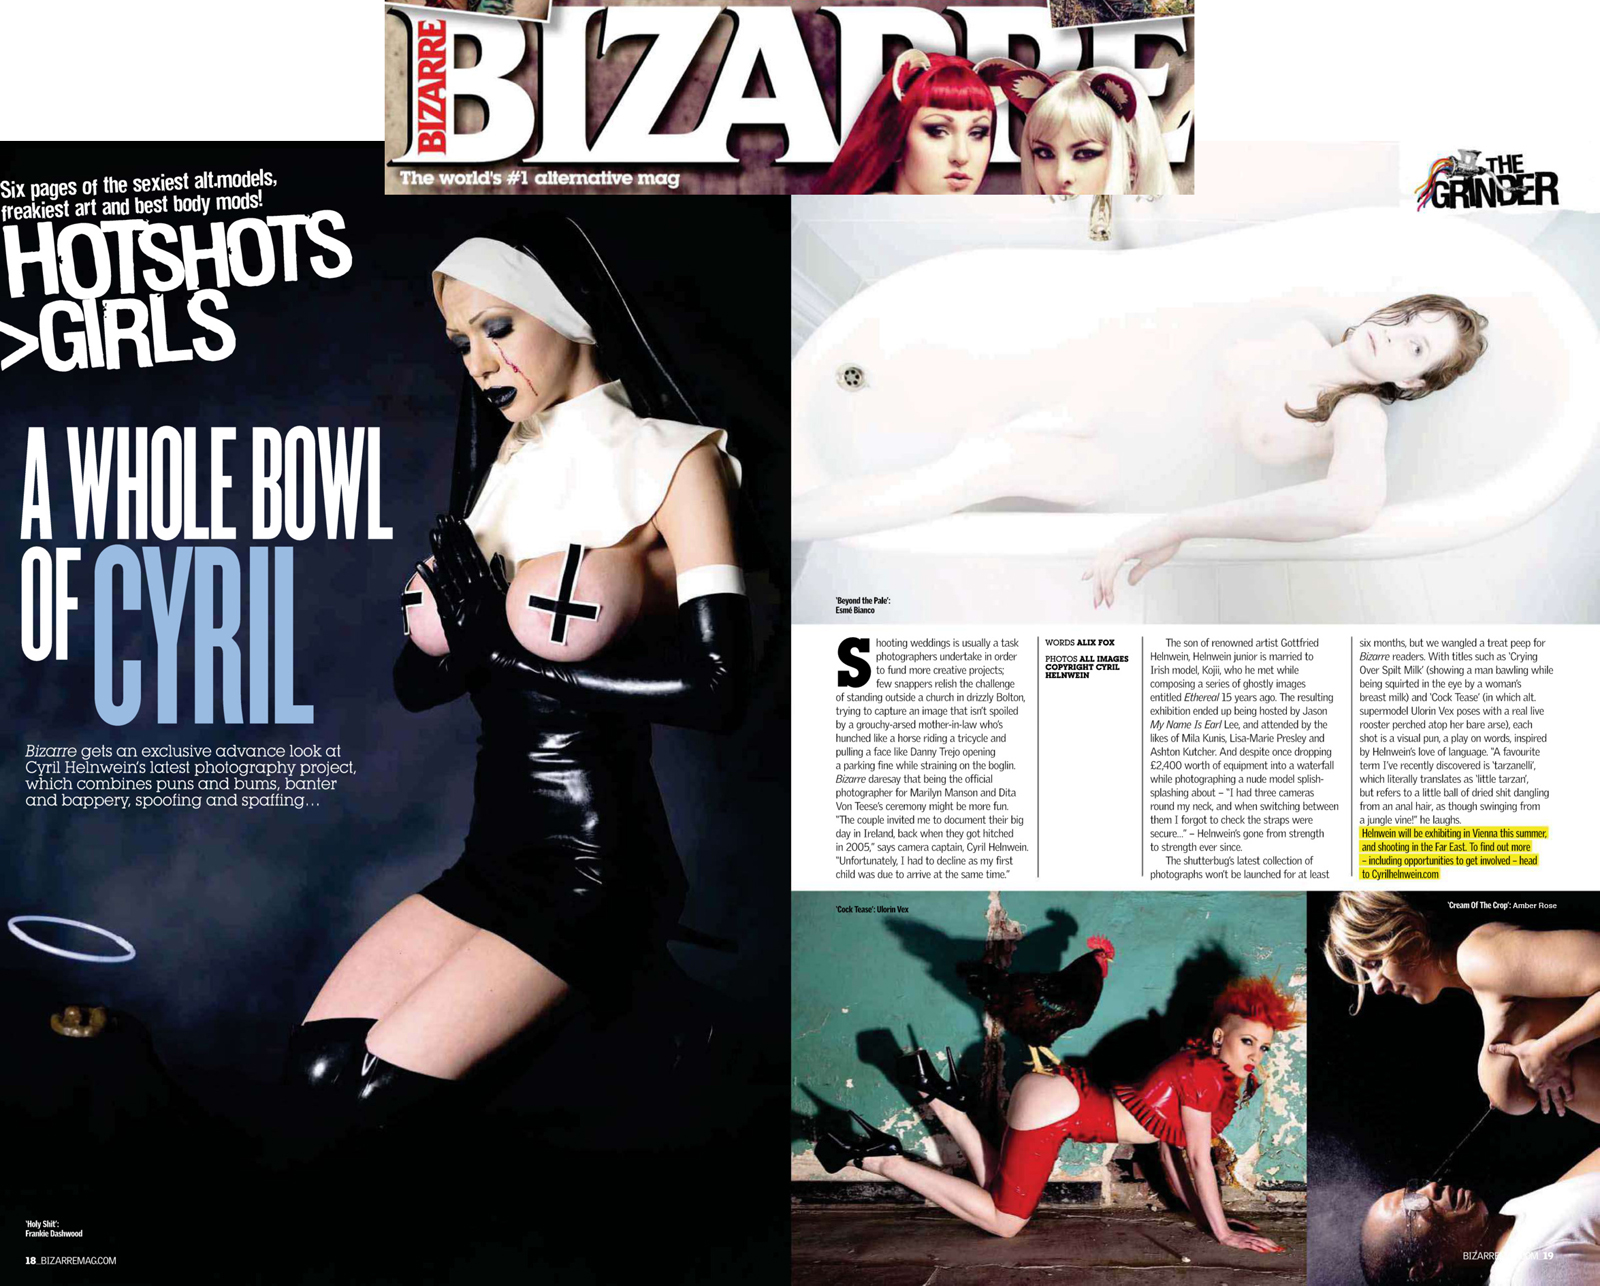 Bizarre Magazine article and interview Cyril Helnwein